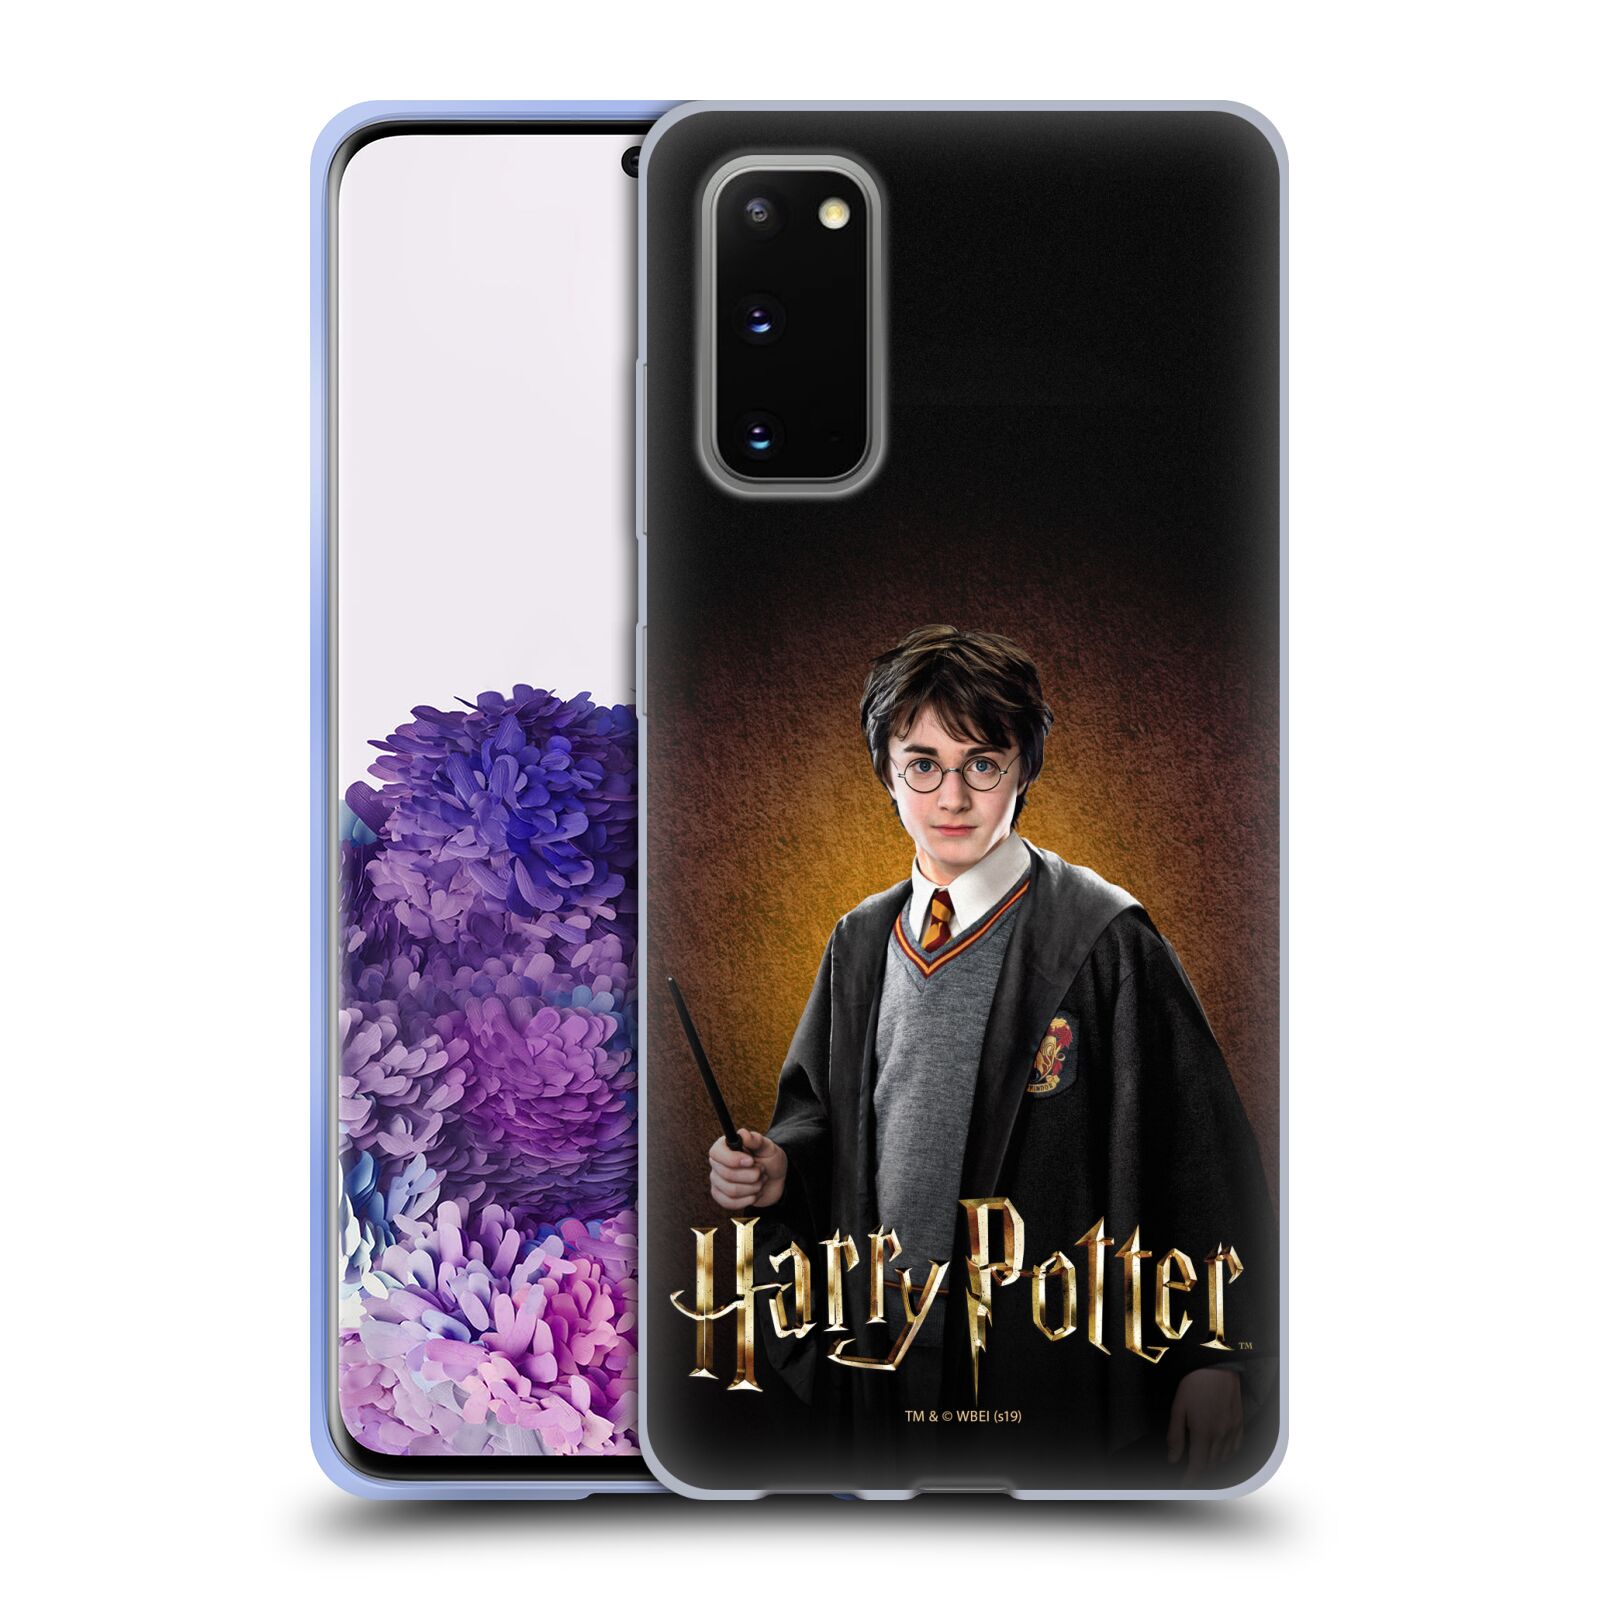 Silikonové pouzdro na mobil Samsung Galaxy S20 - Harry Potter - Malý Harry Potter (Silikonový kryt, obal, pouzdro na mobilní telefon Samsung Galaxy S20 s licencovaným motivem Harry Potter - Malý Harry Potter)